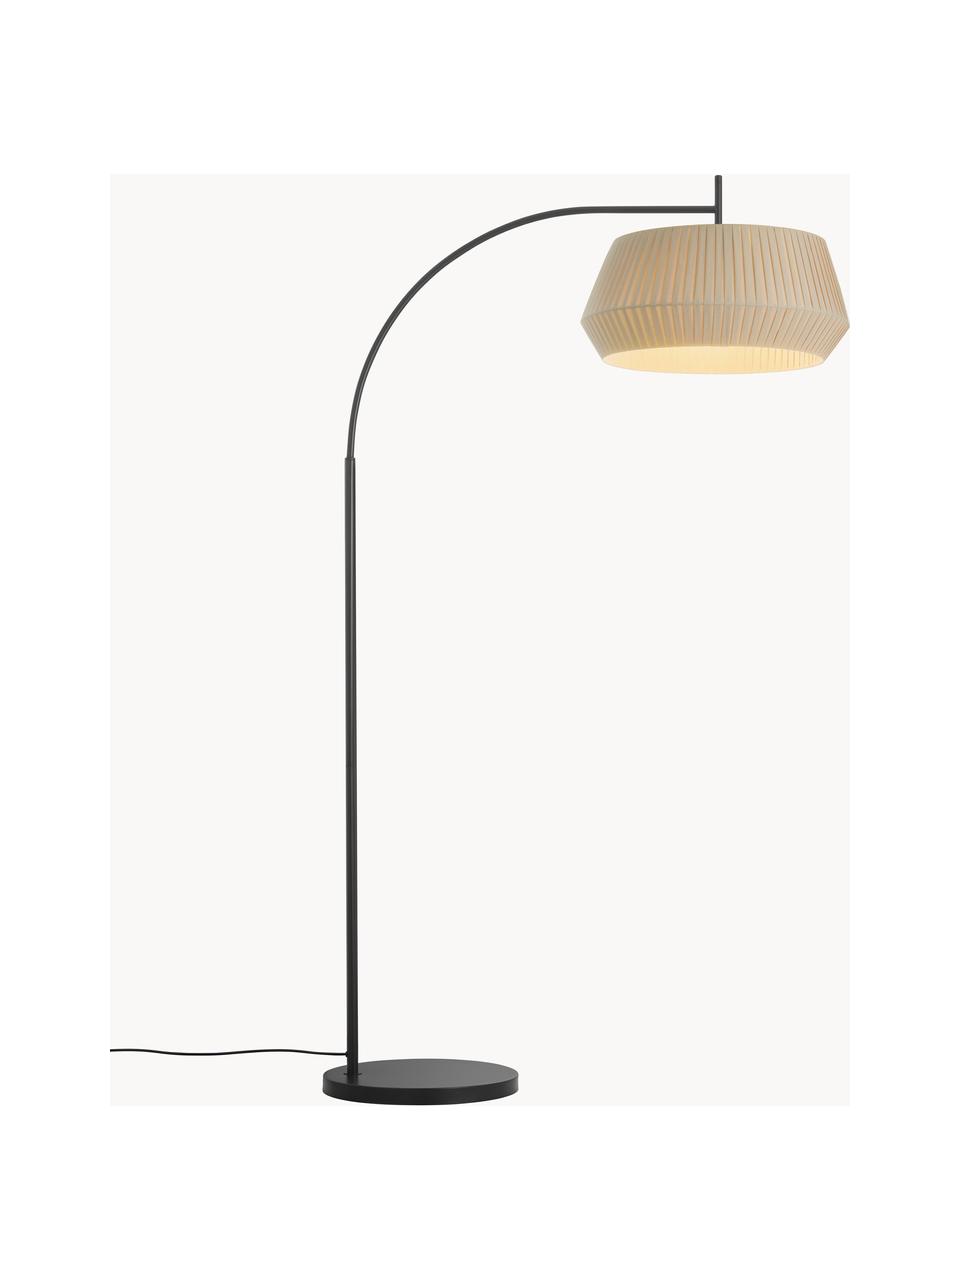 Grand lampadaire arc Dicte, Beige, noir, haut. 180 cm